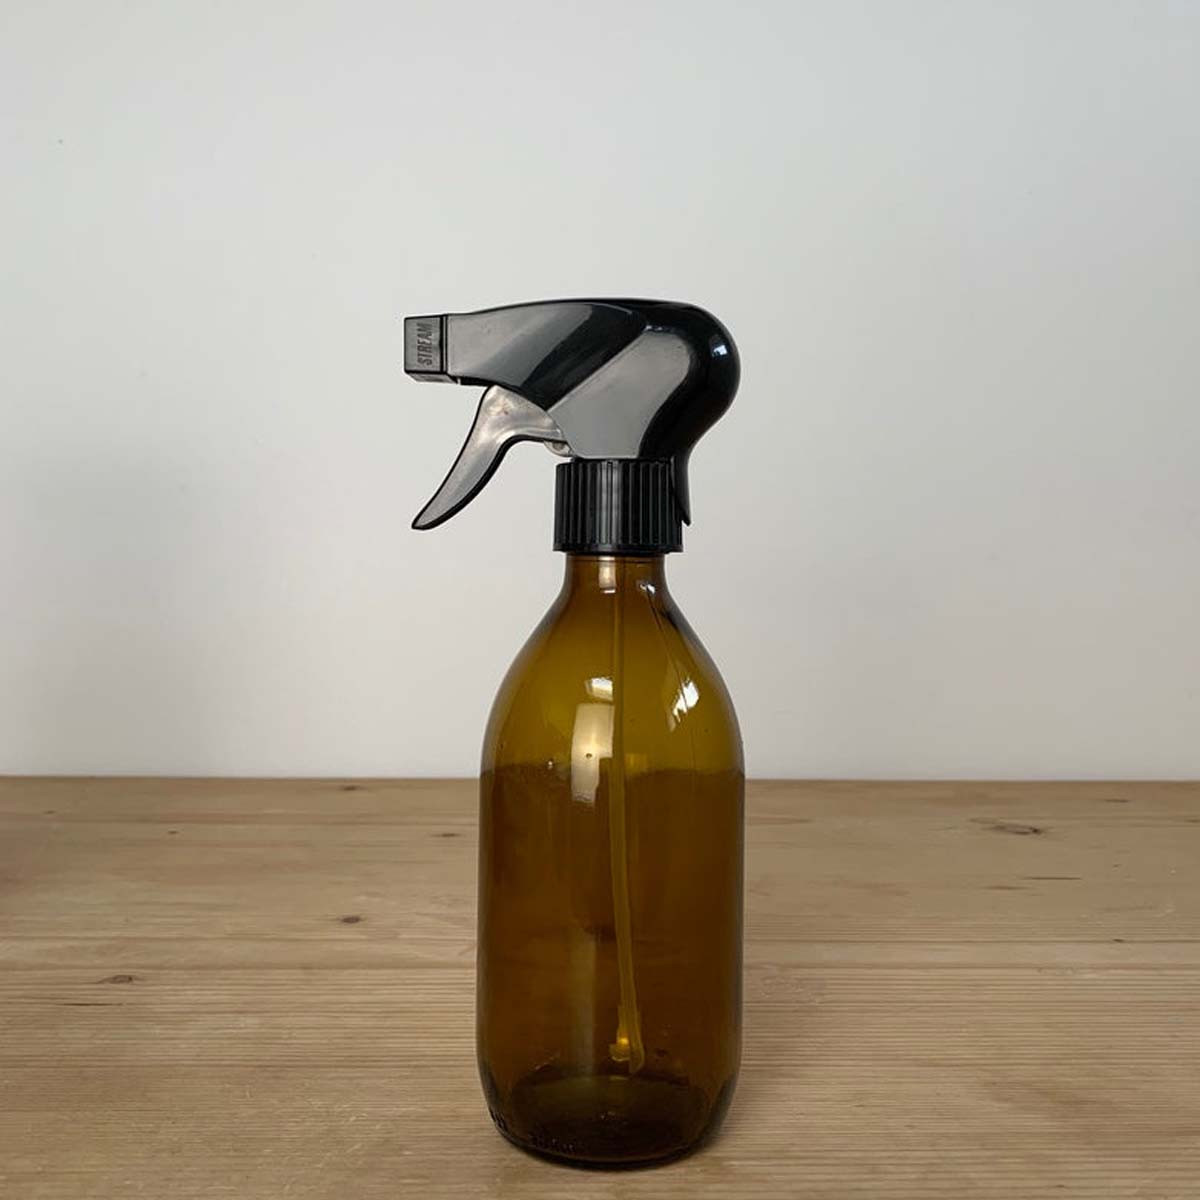 Vaporisateur spray en verre ambré 500 ml